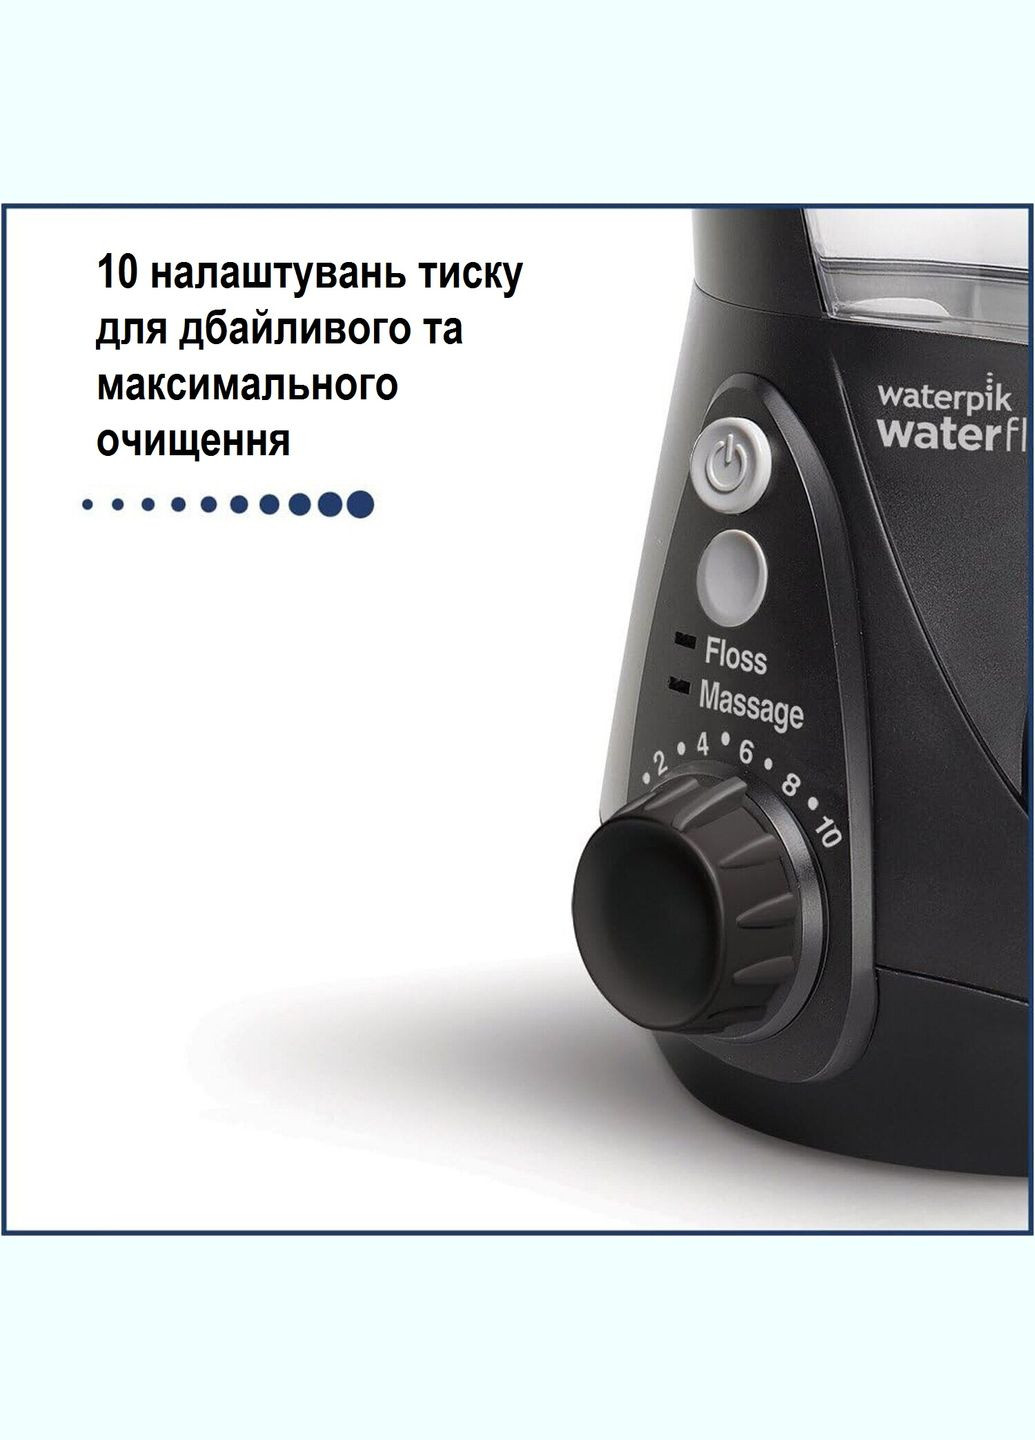 Стационарный ирригатор WP662UK Ultra Professional Water Flosser Black без коробки Waterpik (286422246)